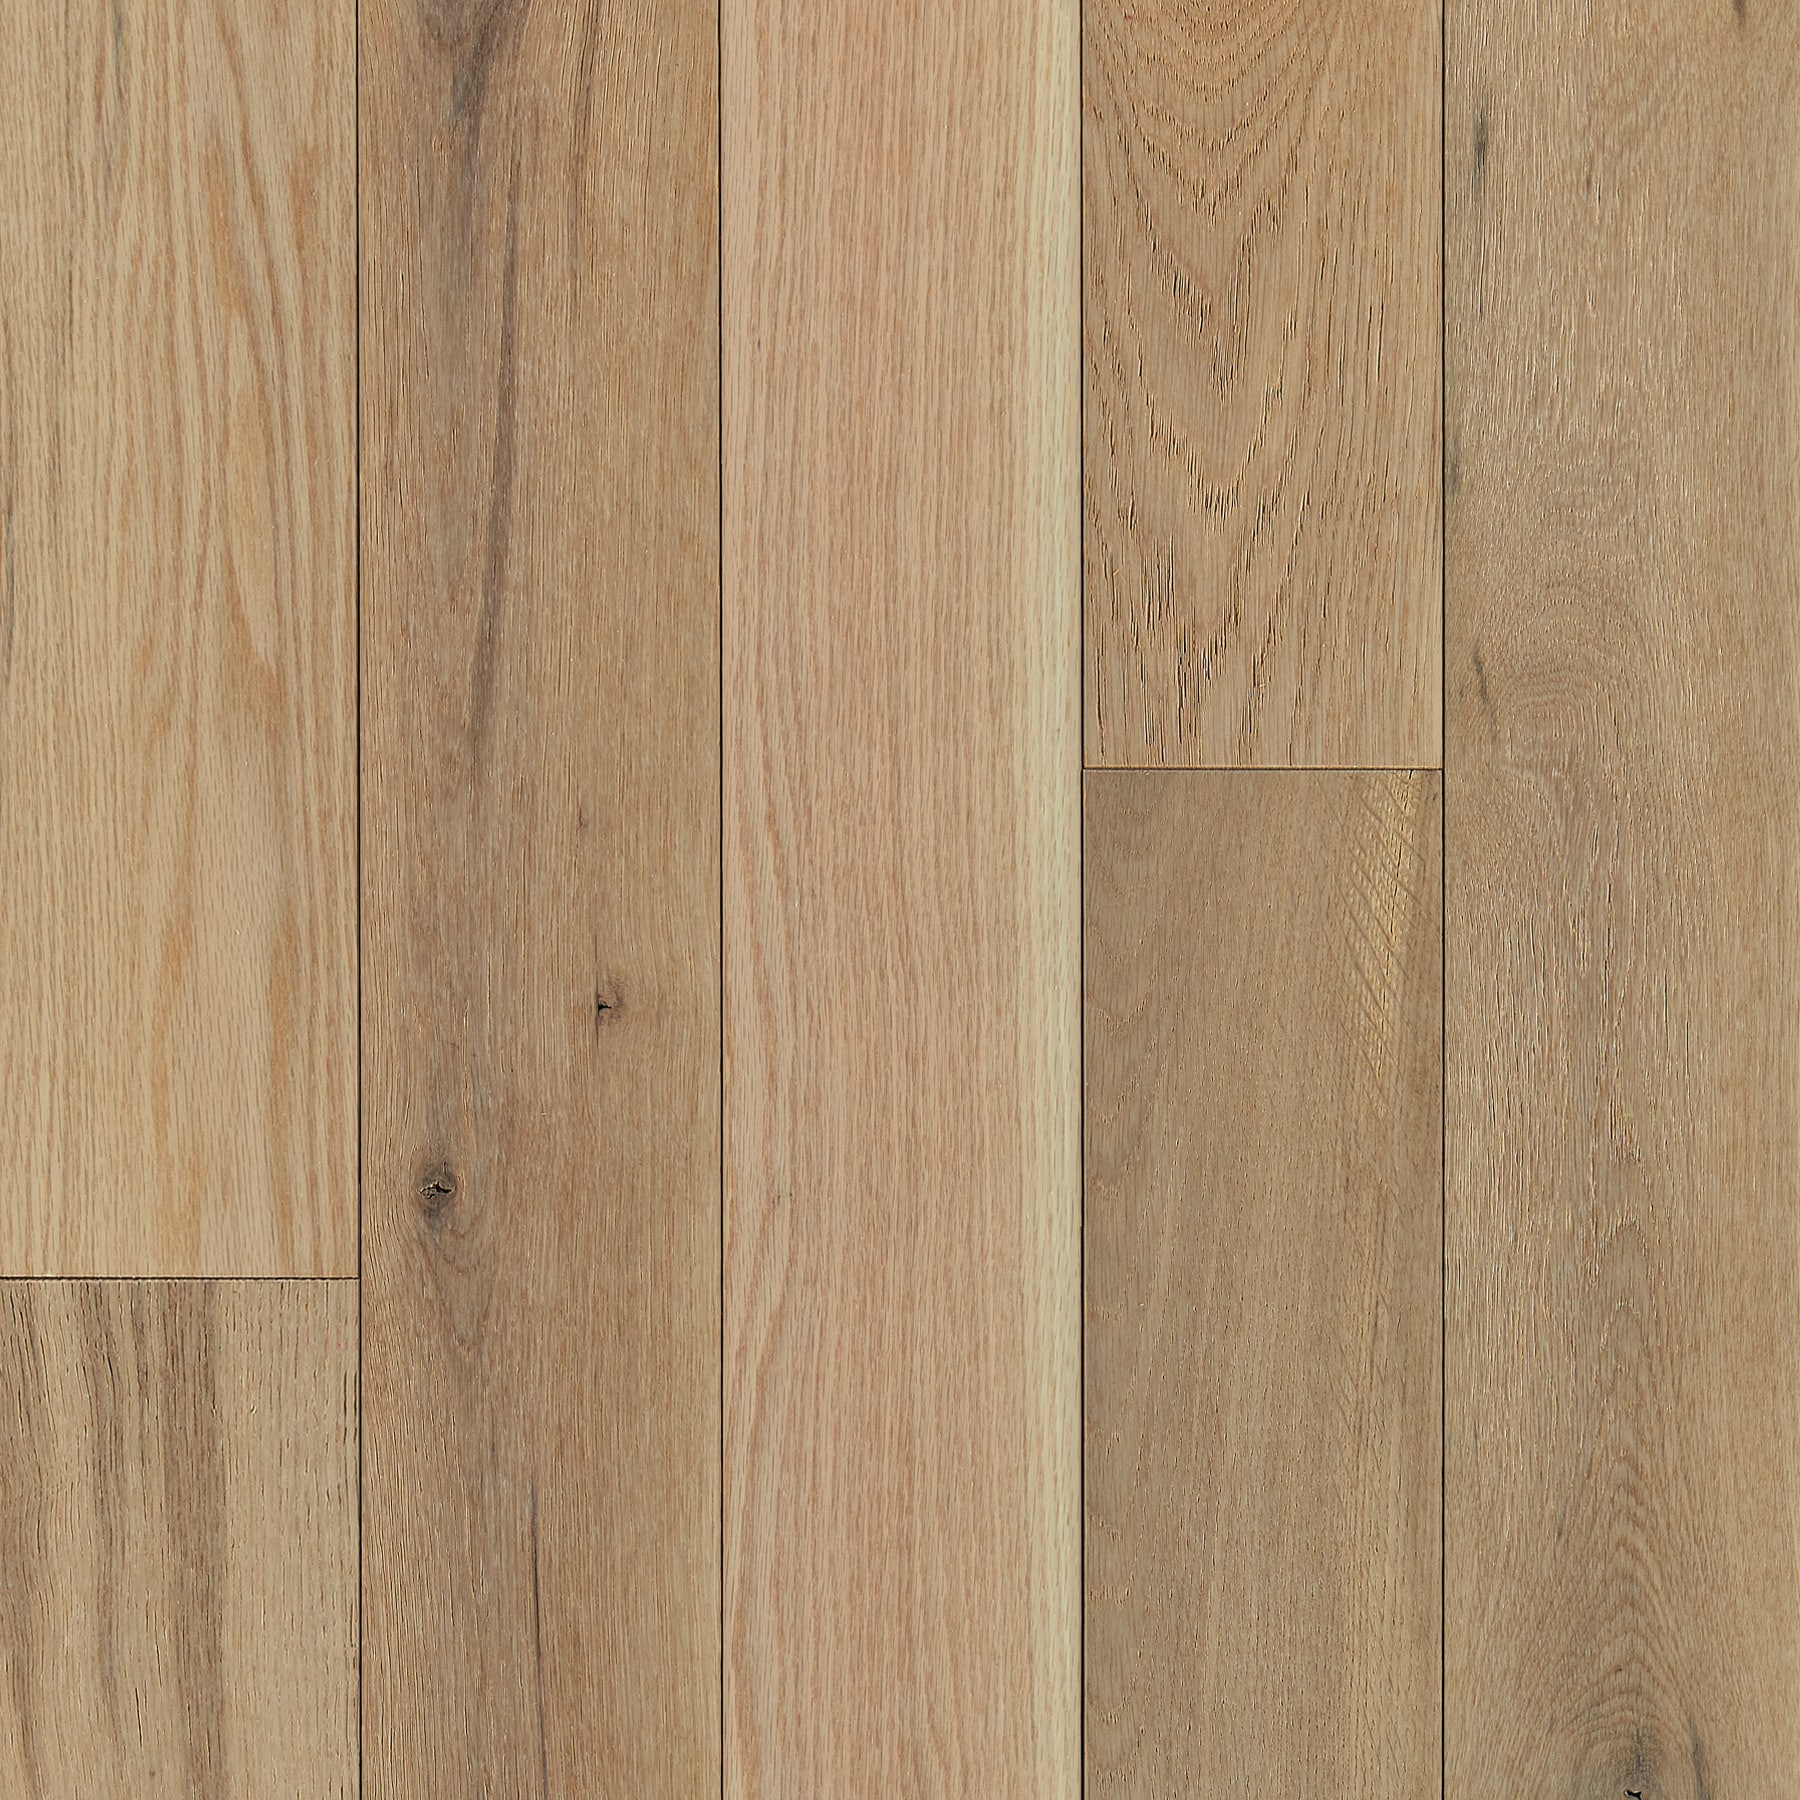 Hydroblok White Oak Hartco Engineered Hardwood Available Now – Woodwudy  Wholesale Flooring